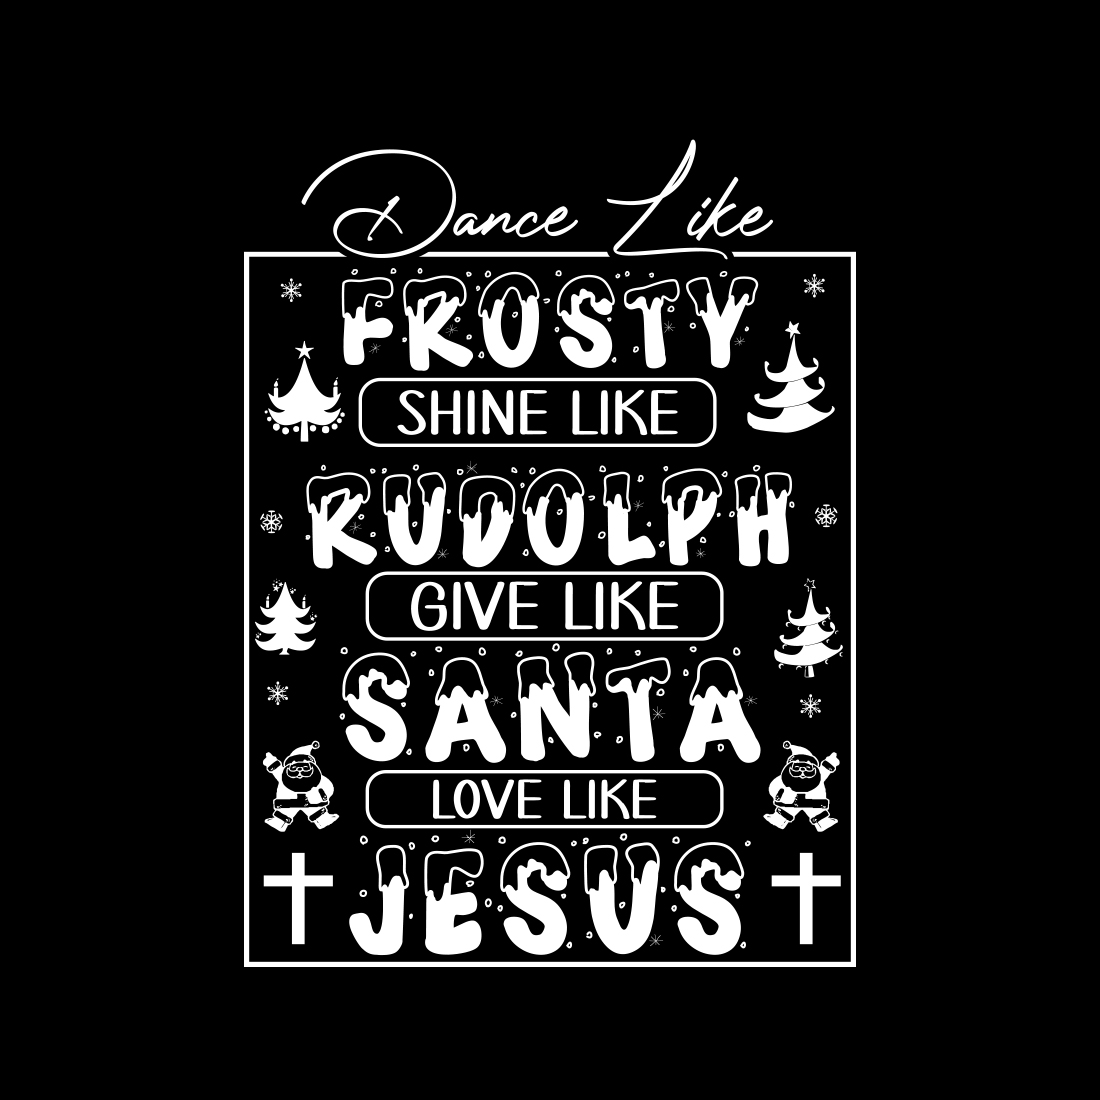 Dance Like Frosty Shine like Rudolph Give like Santa Love Like Jesus T-shirt design preview image.